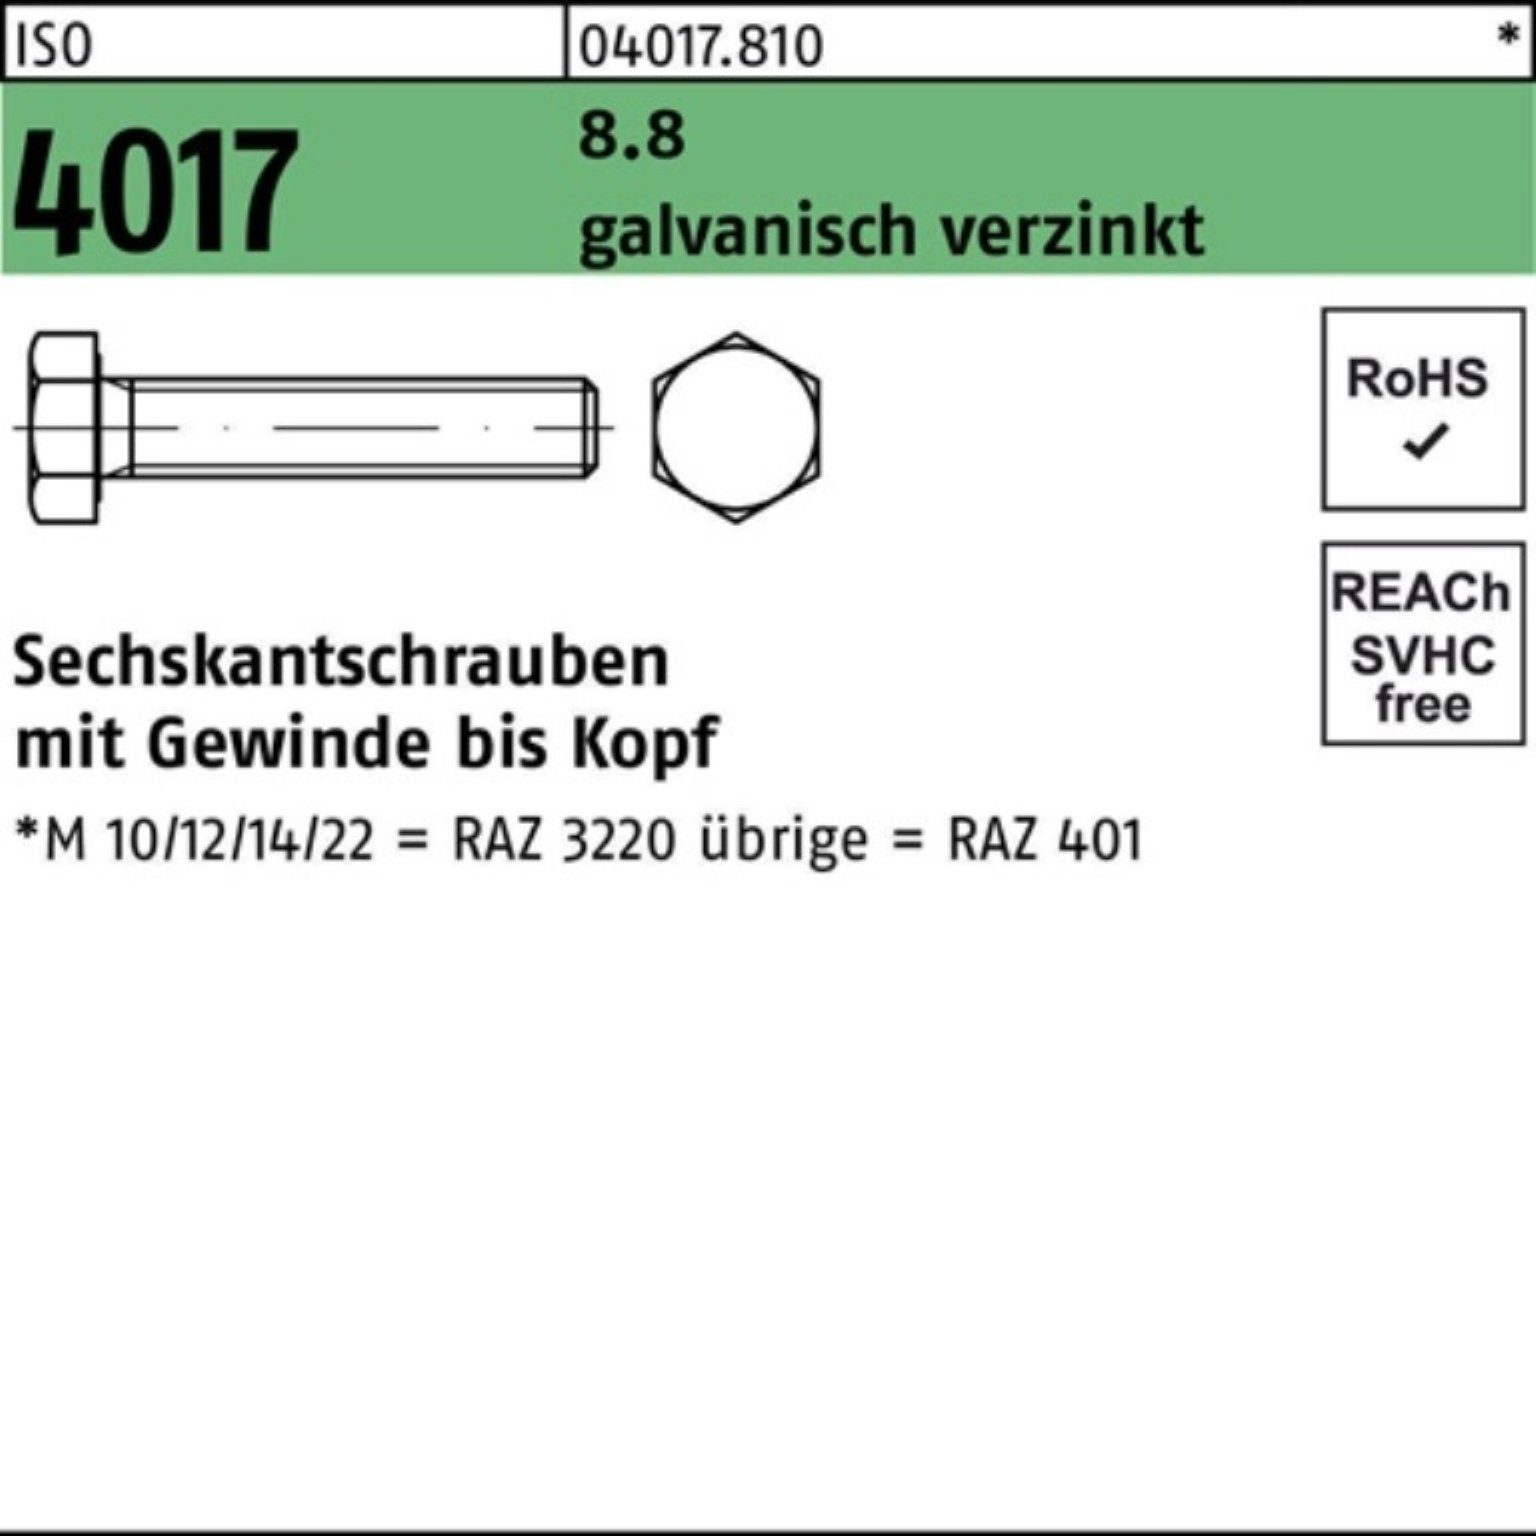 Bufab Sechskantschraube 100er Pack Sechskantschraube St 4017 1 8.8 M16x VG ISO 340 galv.verz